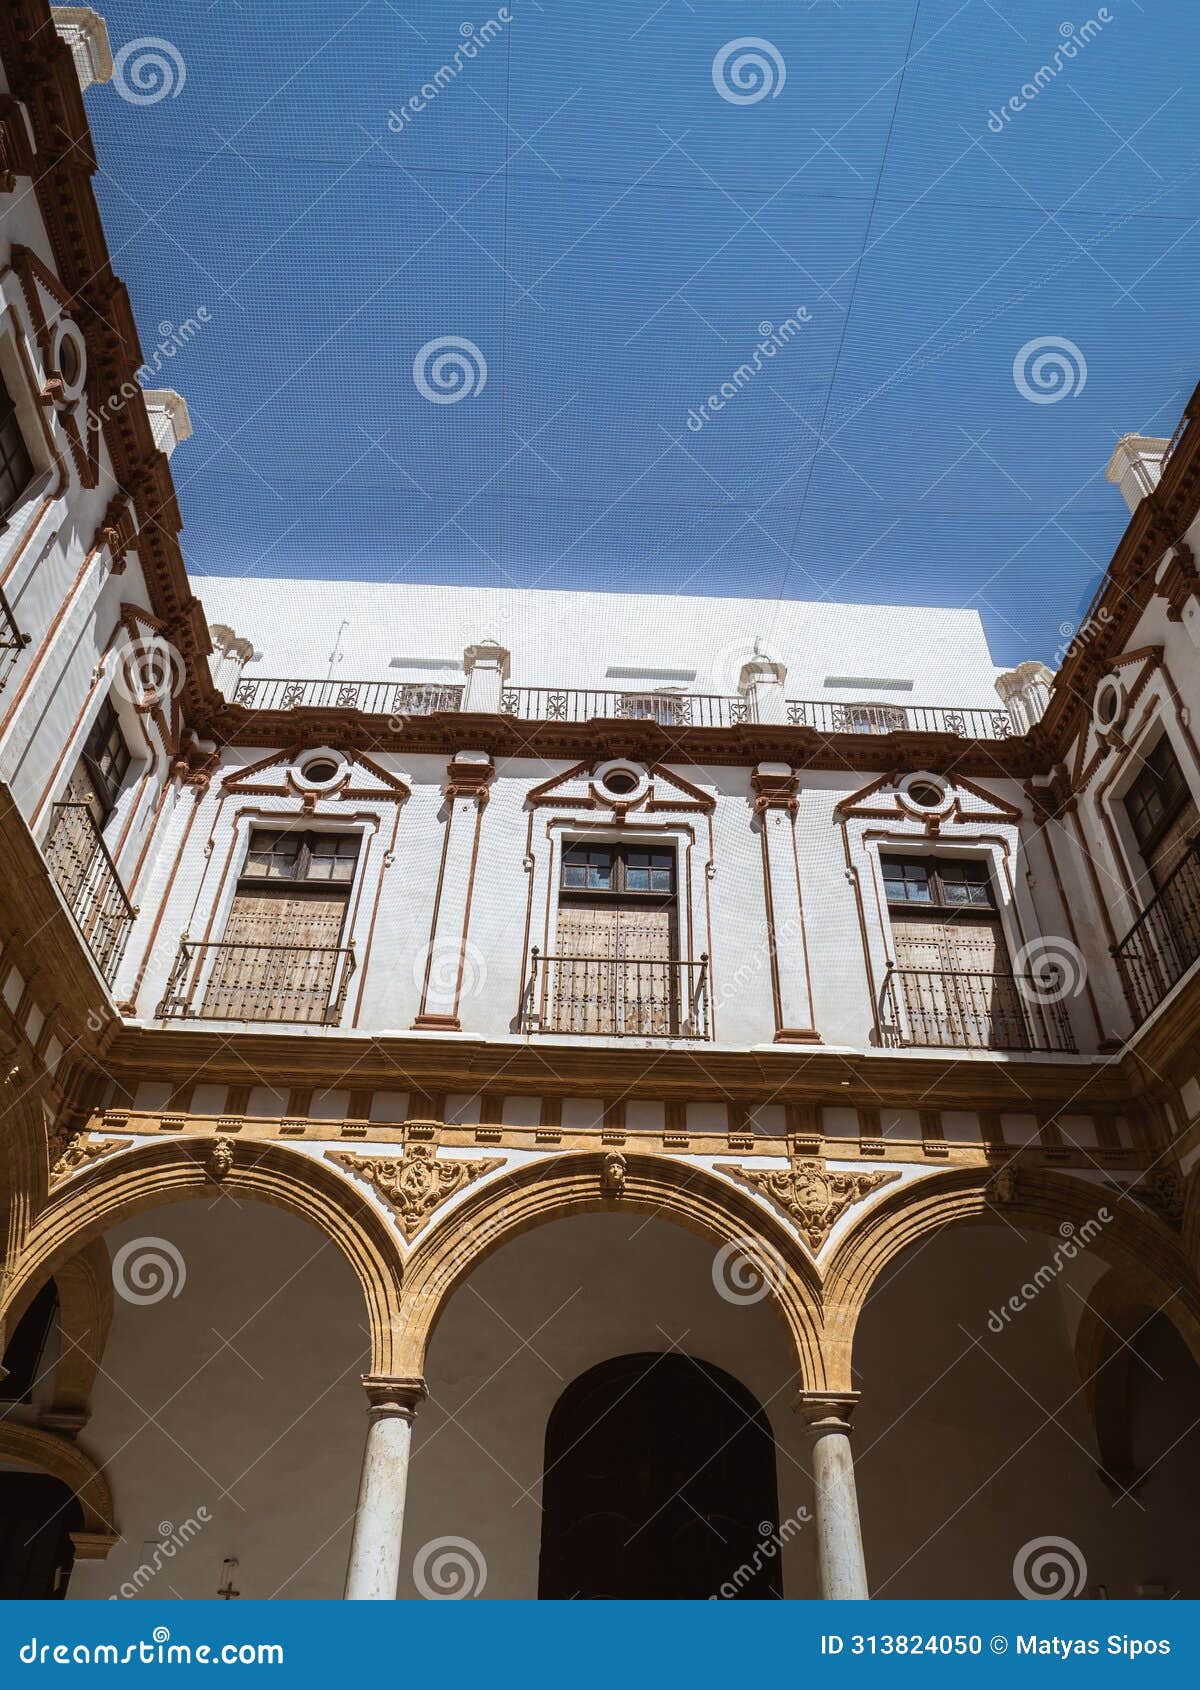 the main courtyard of the old historical women's hospital nuestra senora del carmen hospital in cÃÂ¡diz, andalusia, spain